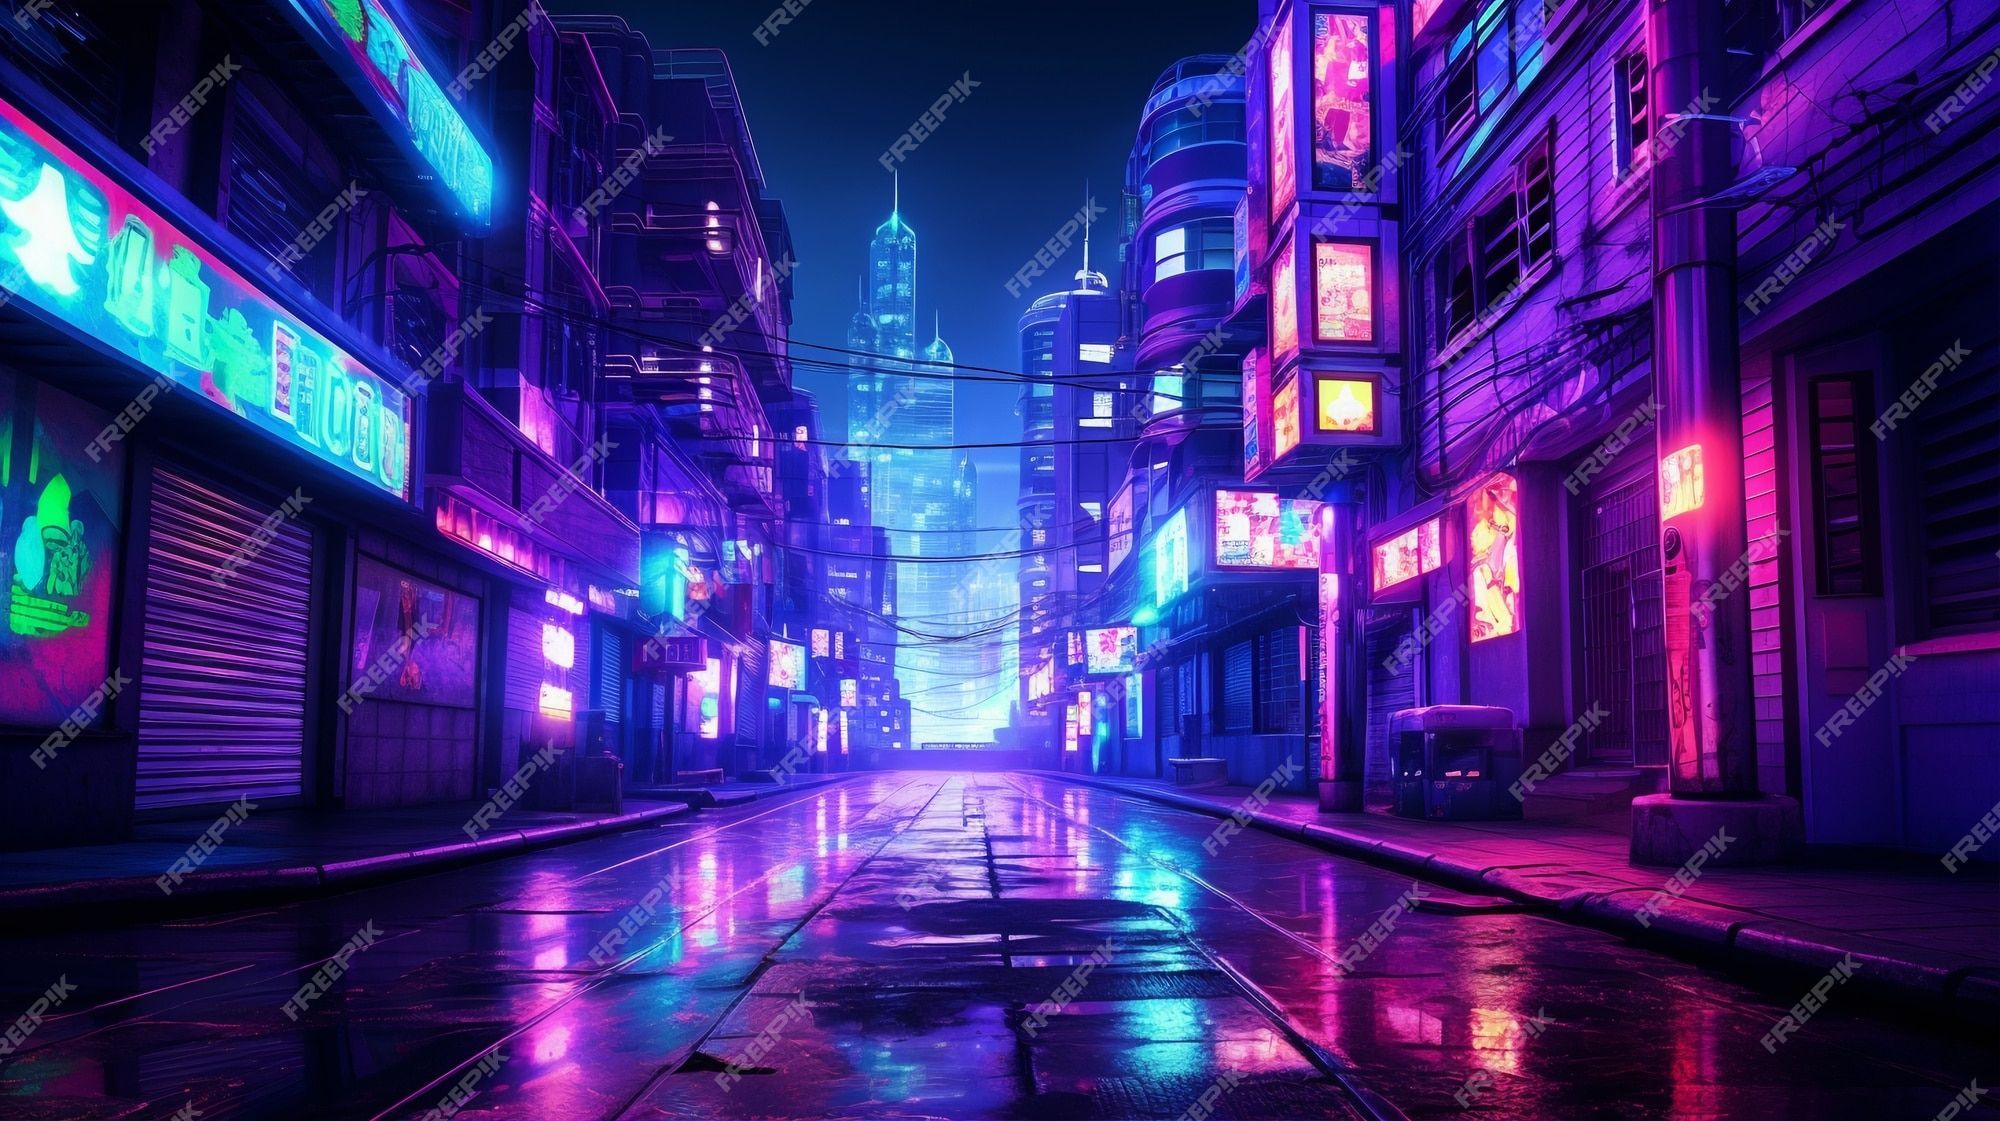 Cyberpunk city street at night with neon lights and rainy streets. 3d illustration - Cyberpunk, Cyberpunk 2077